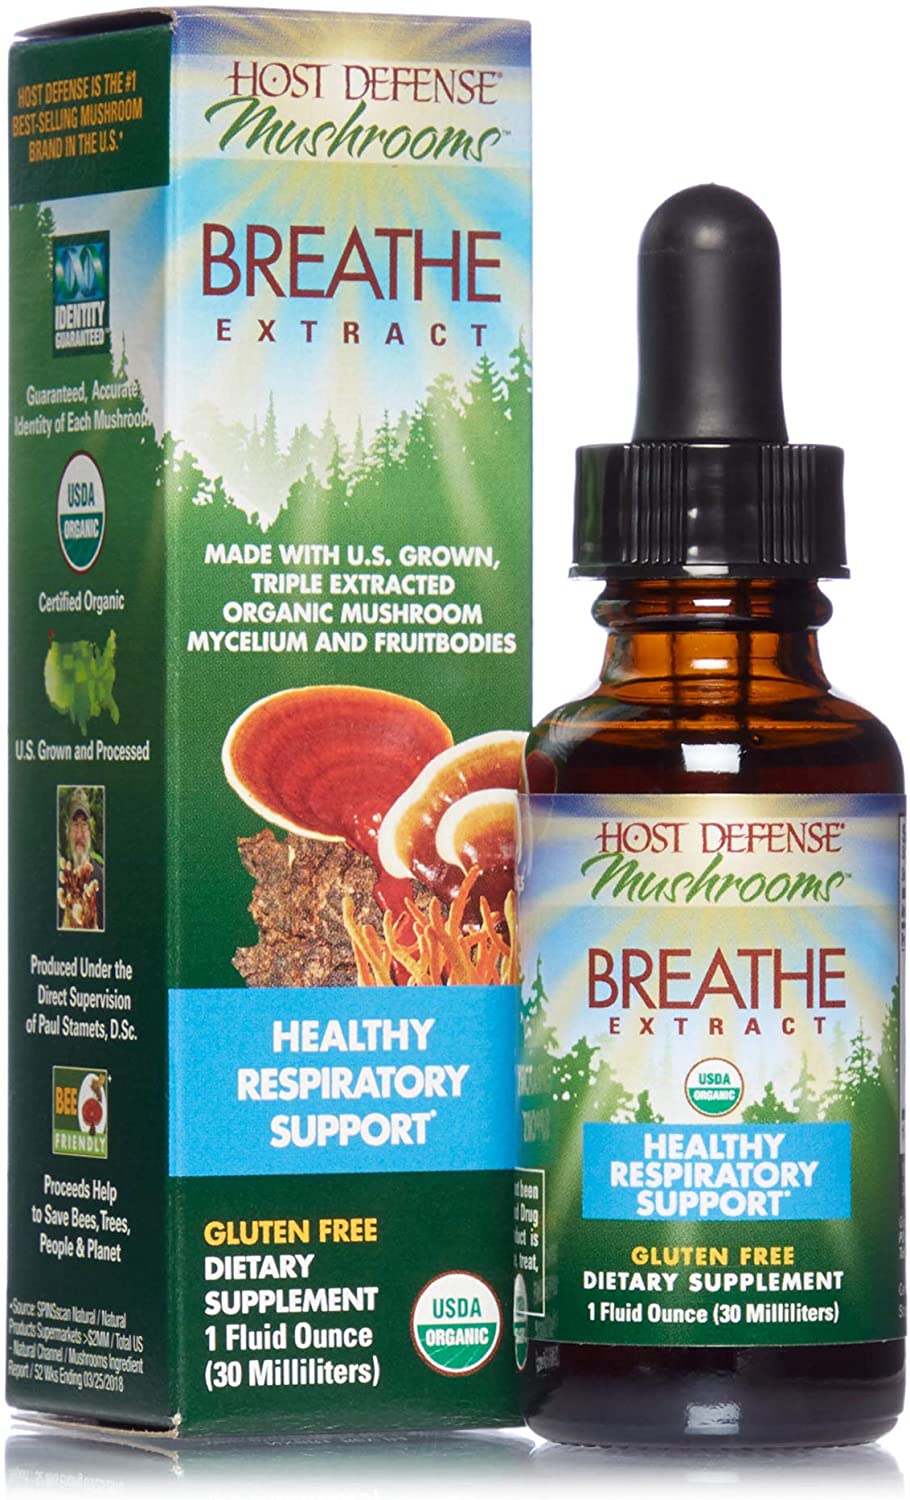 Host Defense Store Breathe Extract Respiratory Support Mushroom Supplement With Cordyceps Reishi And Chaga Vegan Organic 1 Oz -30 Servings